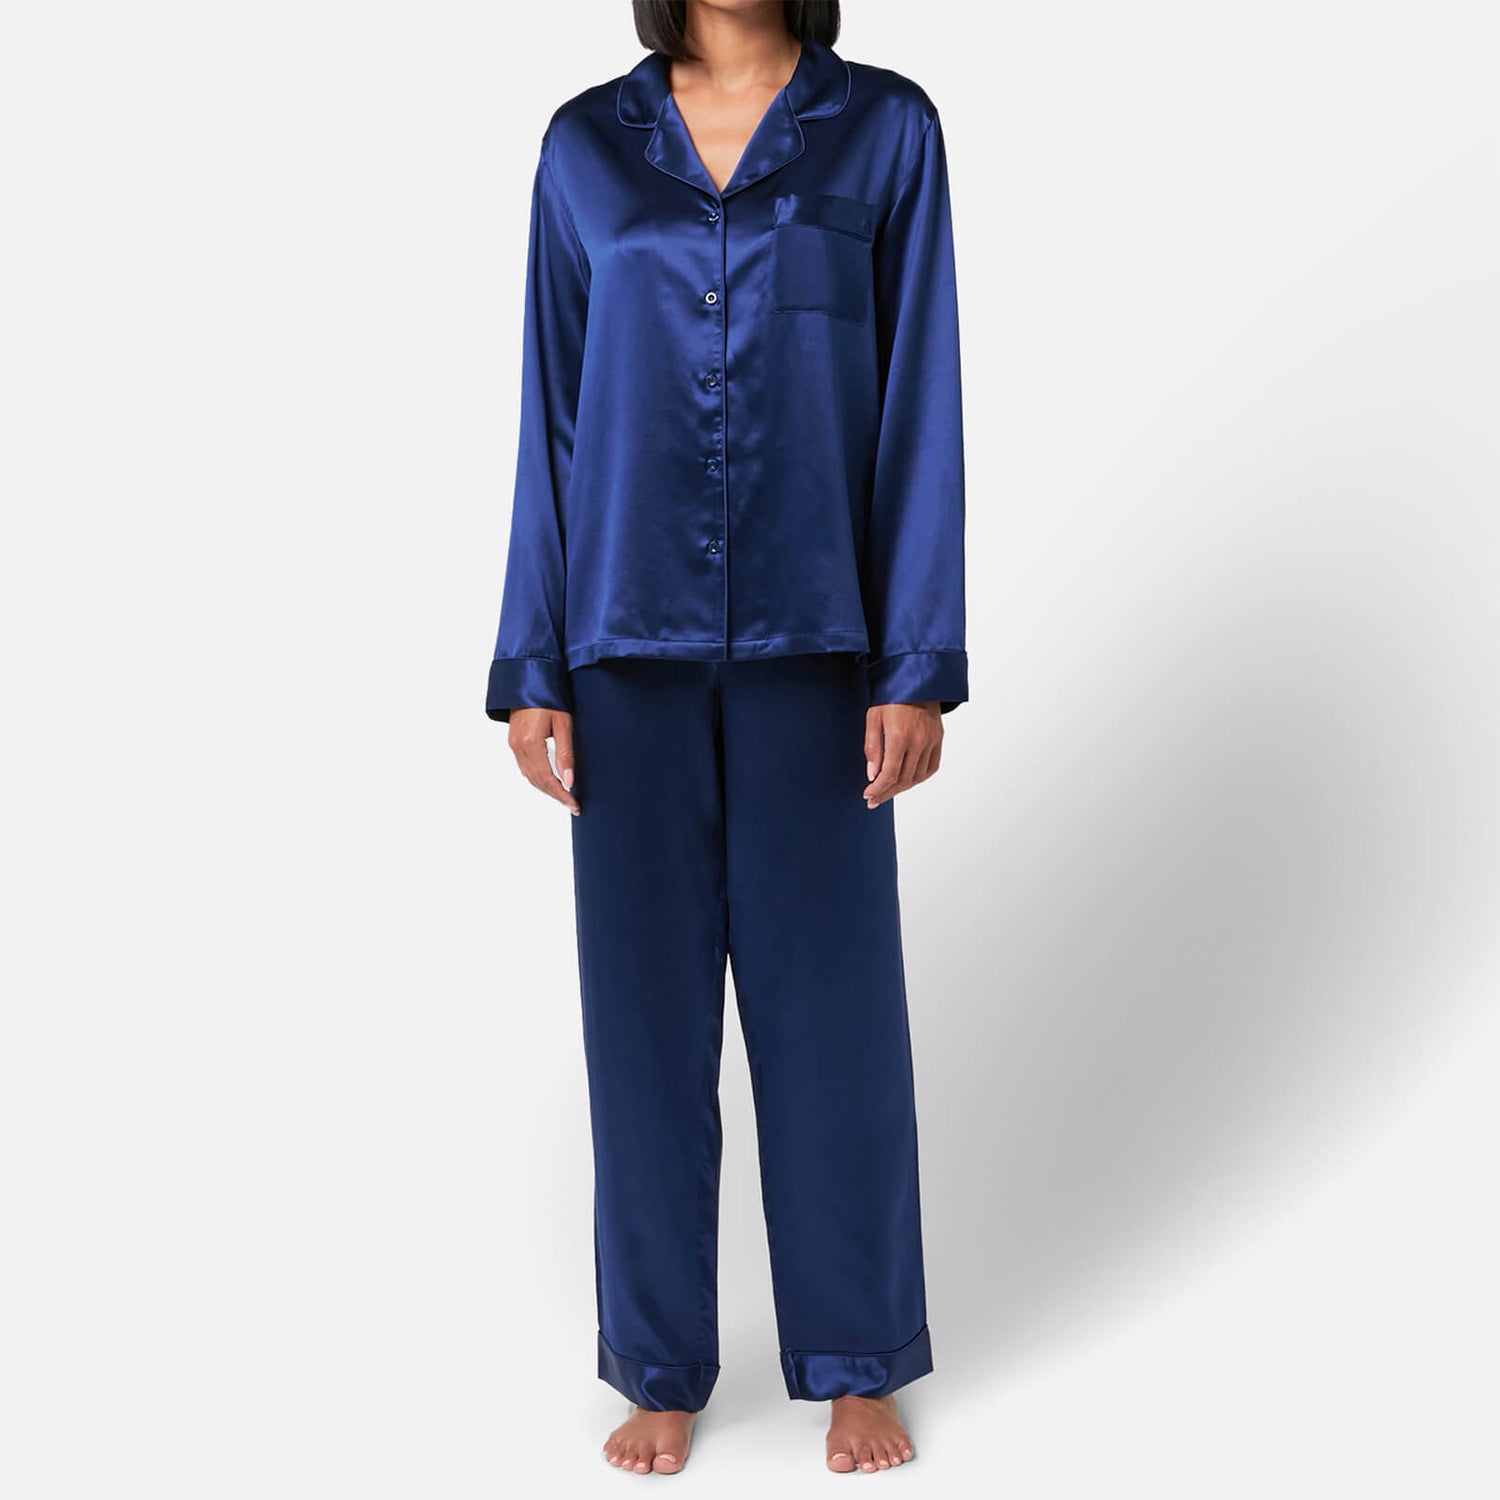 ESPA Freya Silk Pyjamas - Midnight Blue